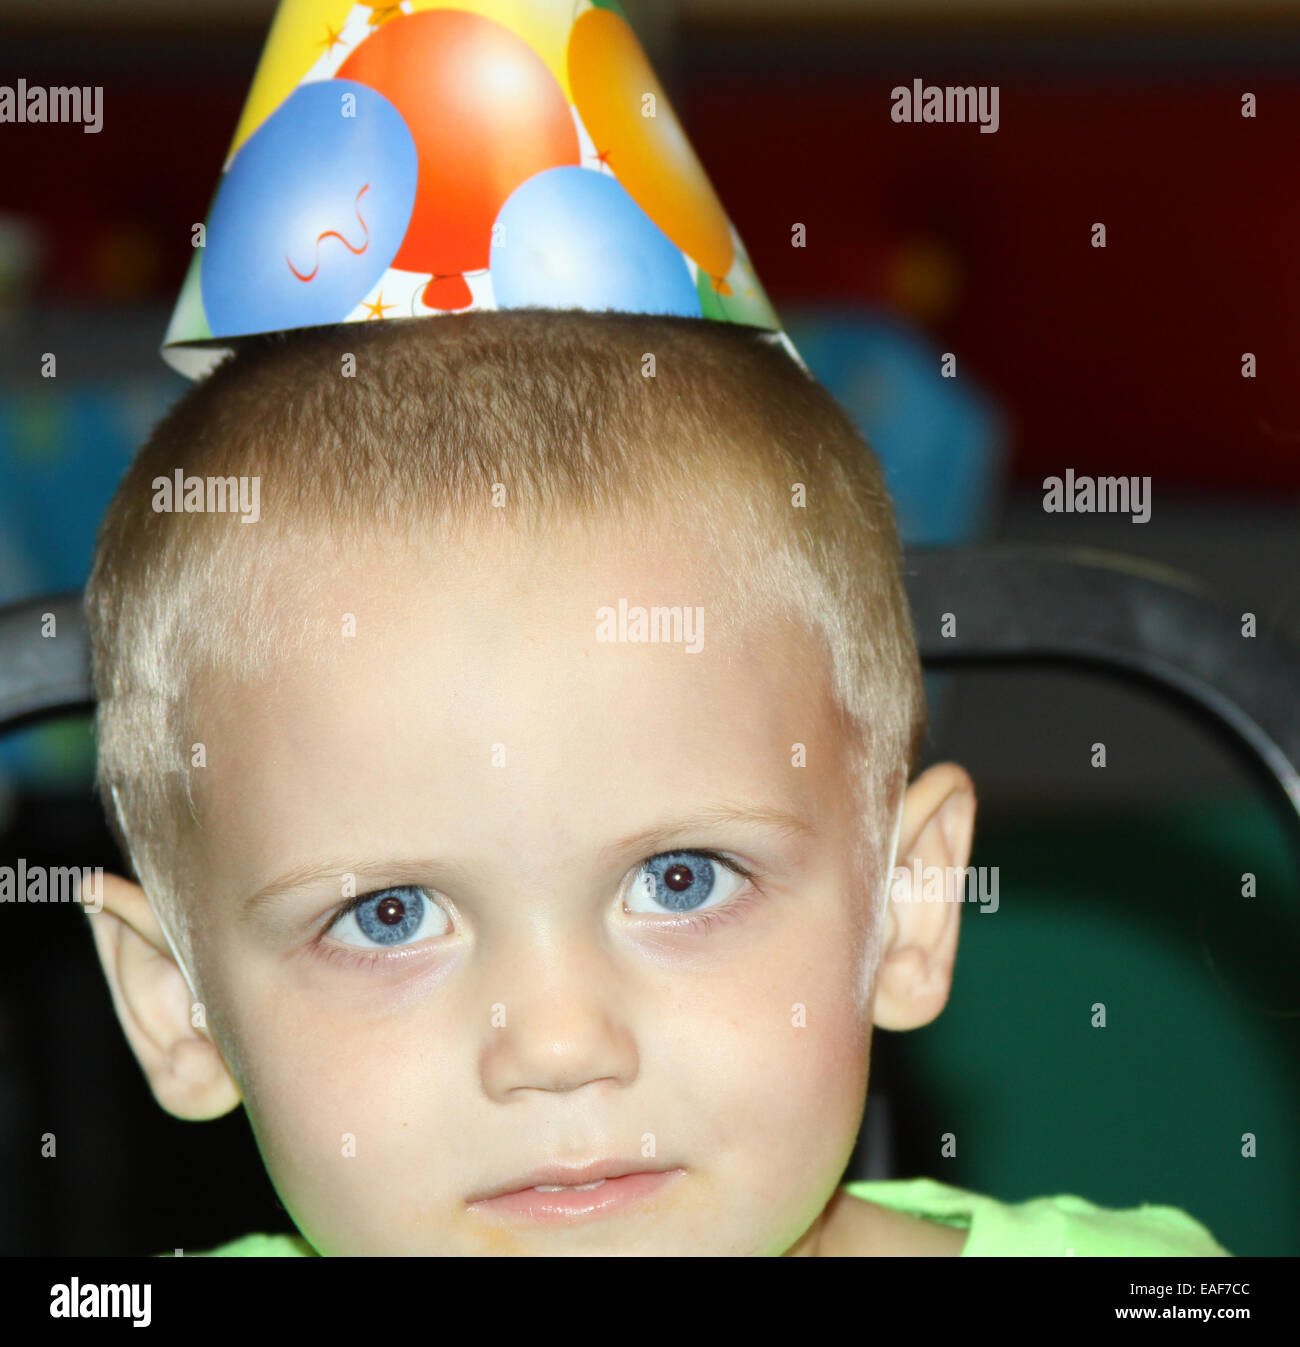 Birthday boy with blue eyes Stock Photo